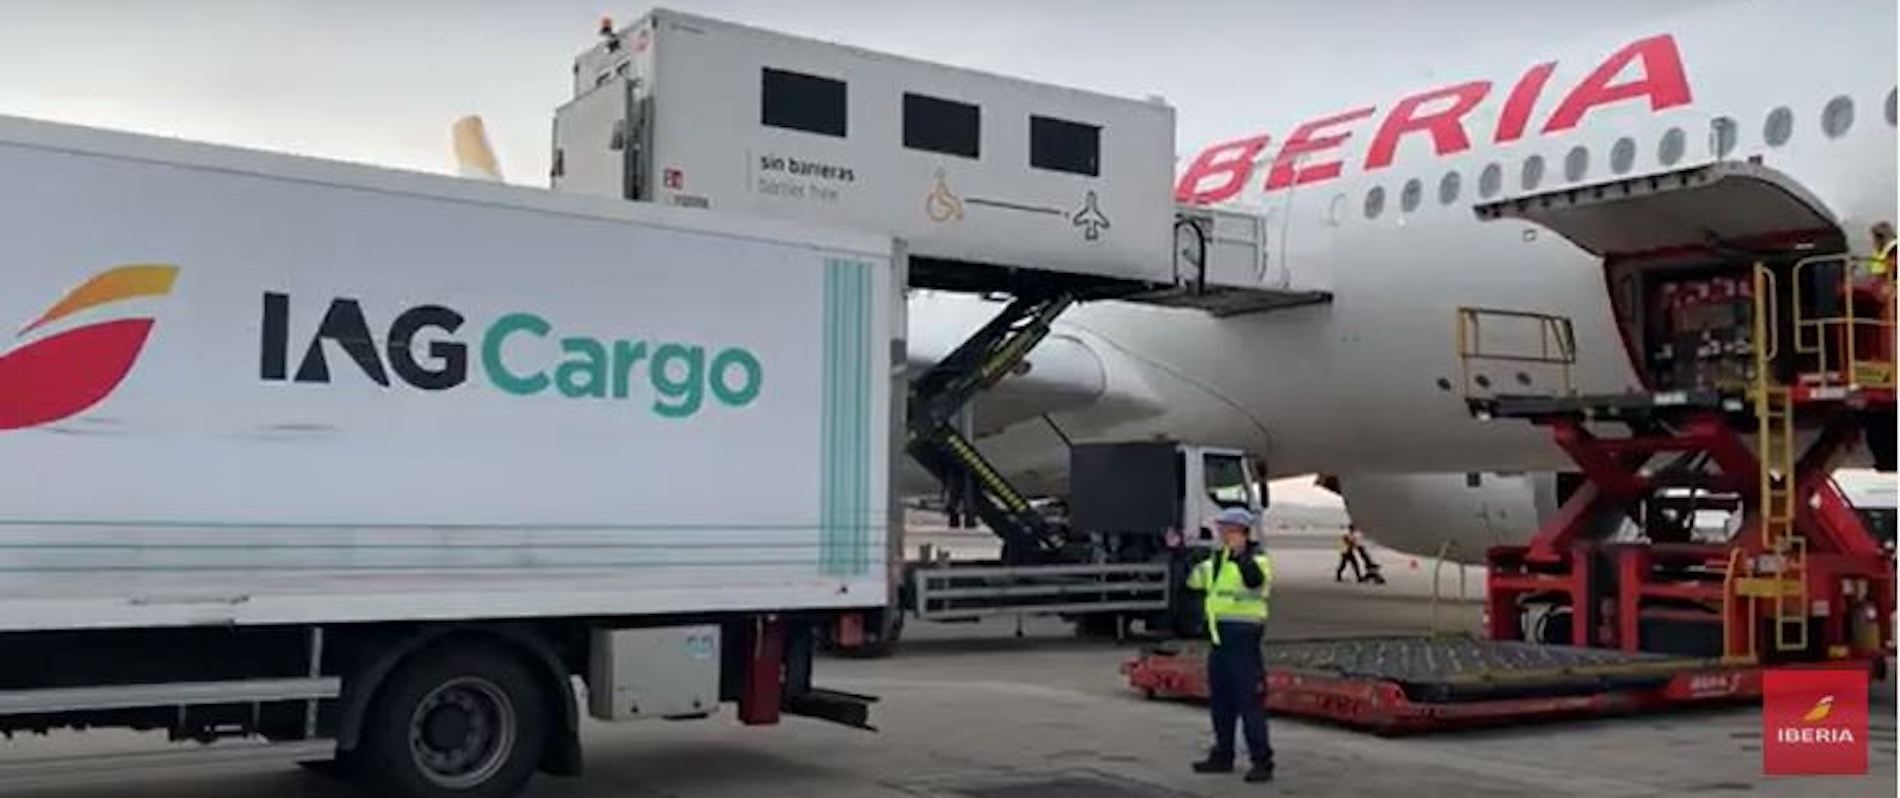 carga aerea flores iag cargo aeropuerto barajdas